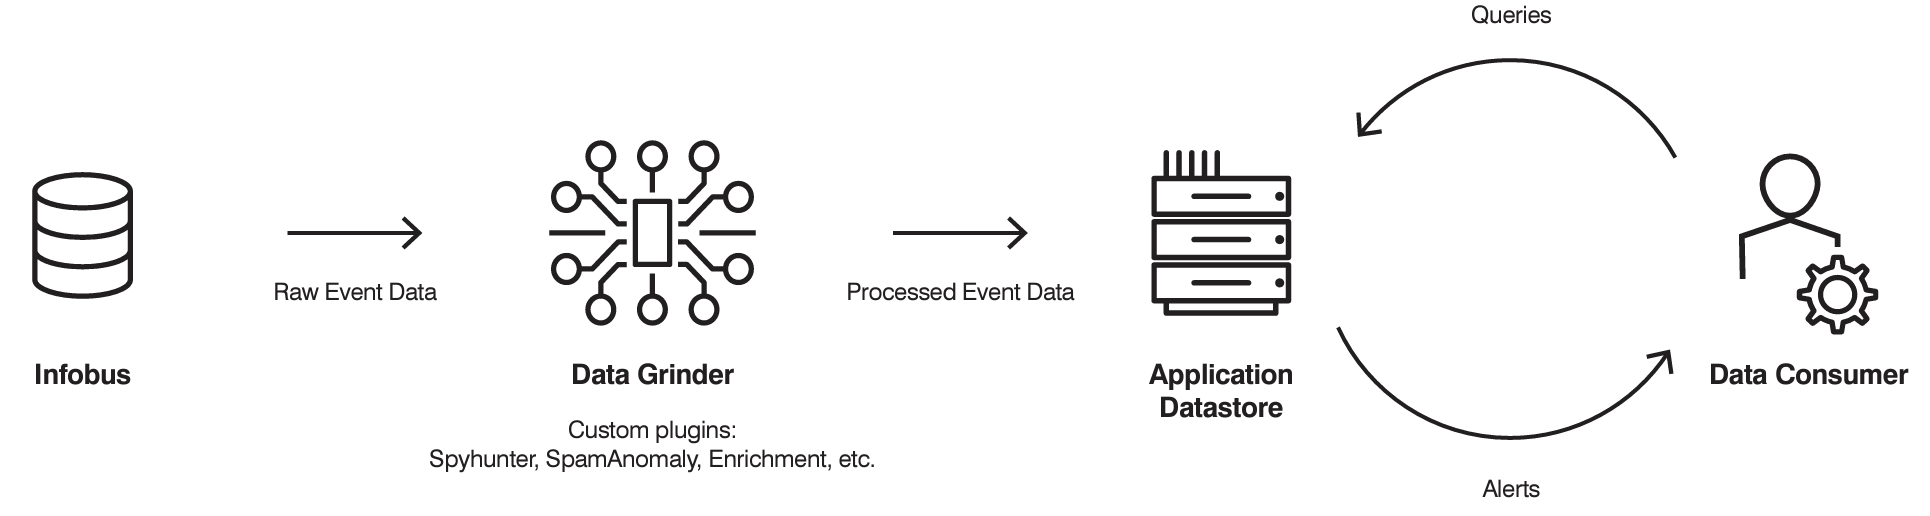 Overview of Data Grinder workflow